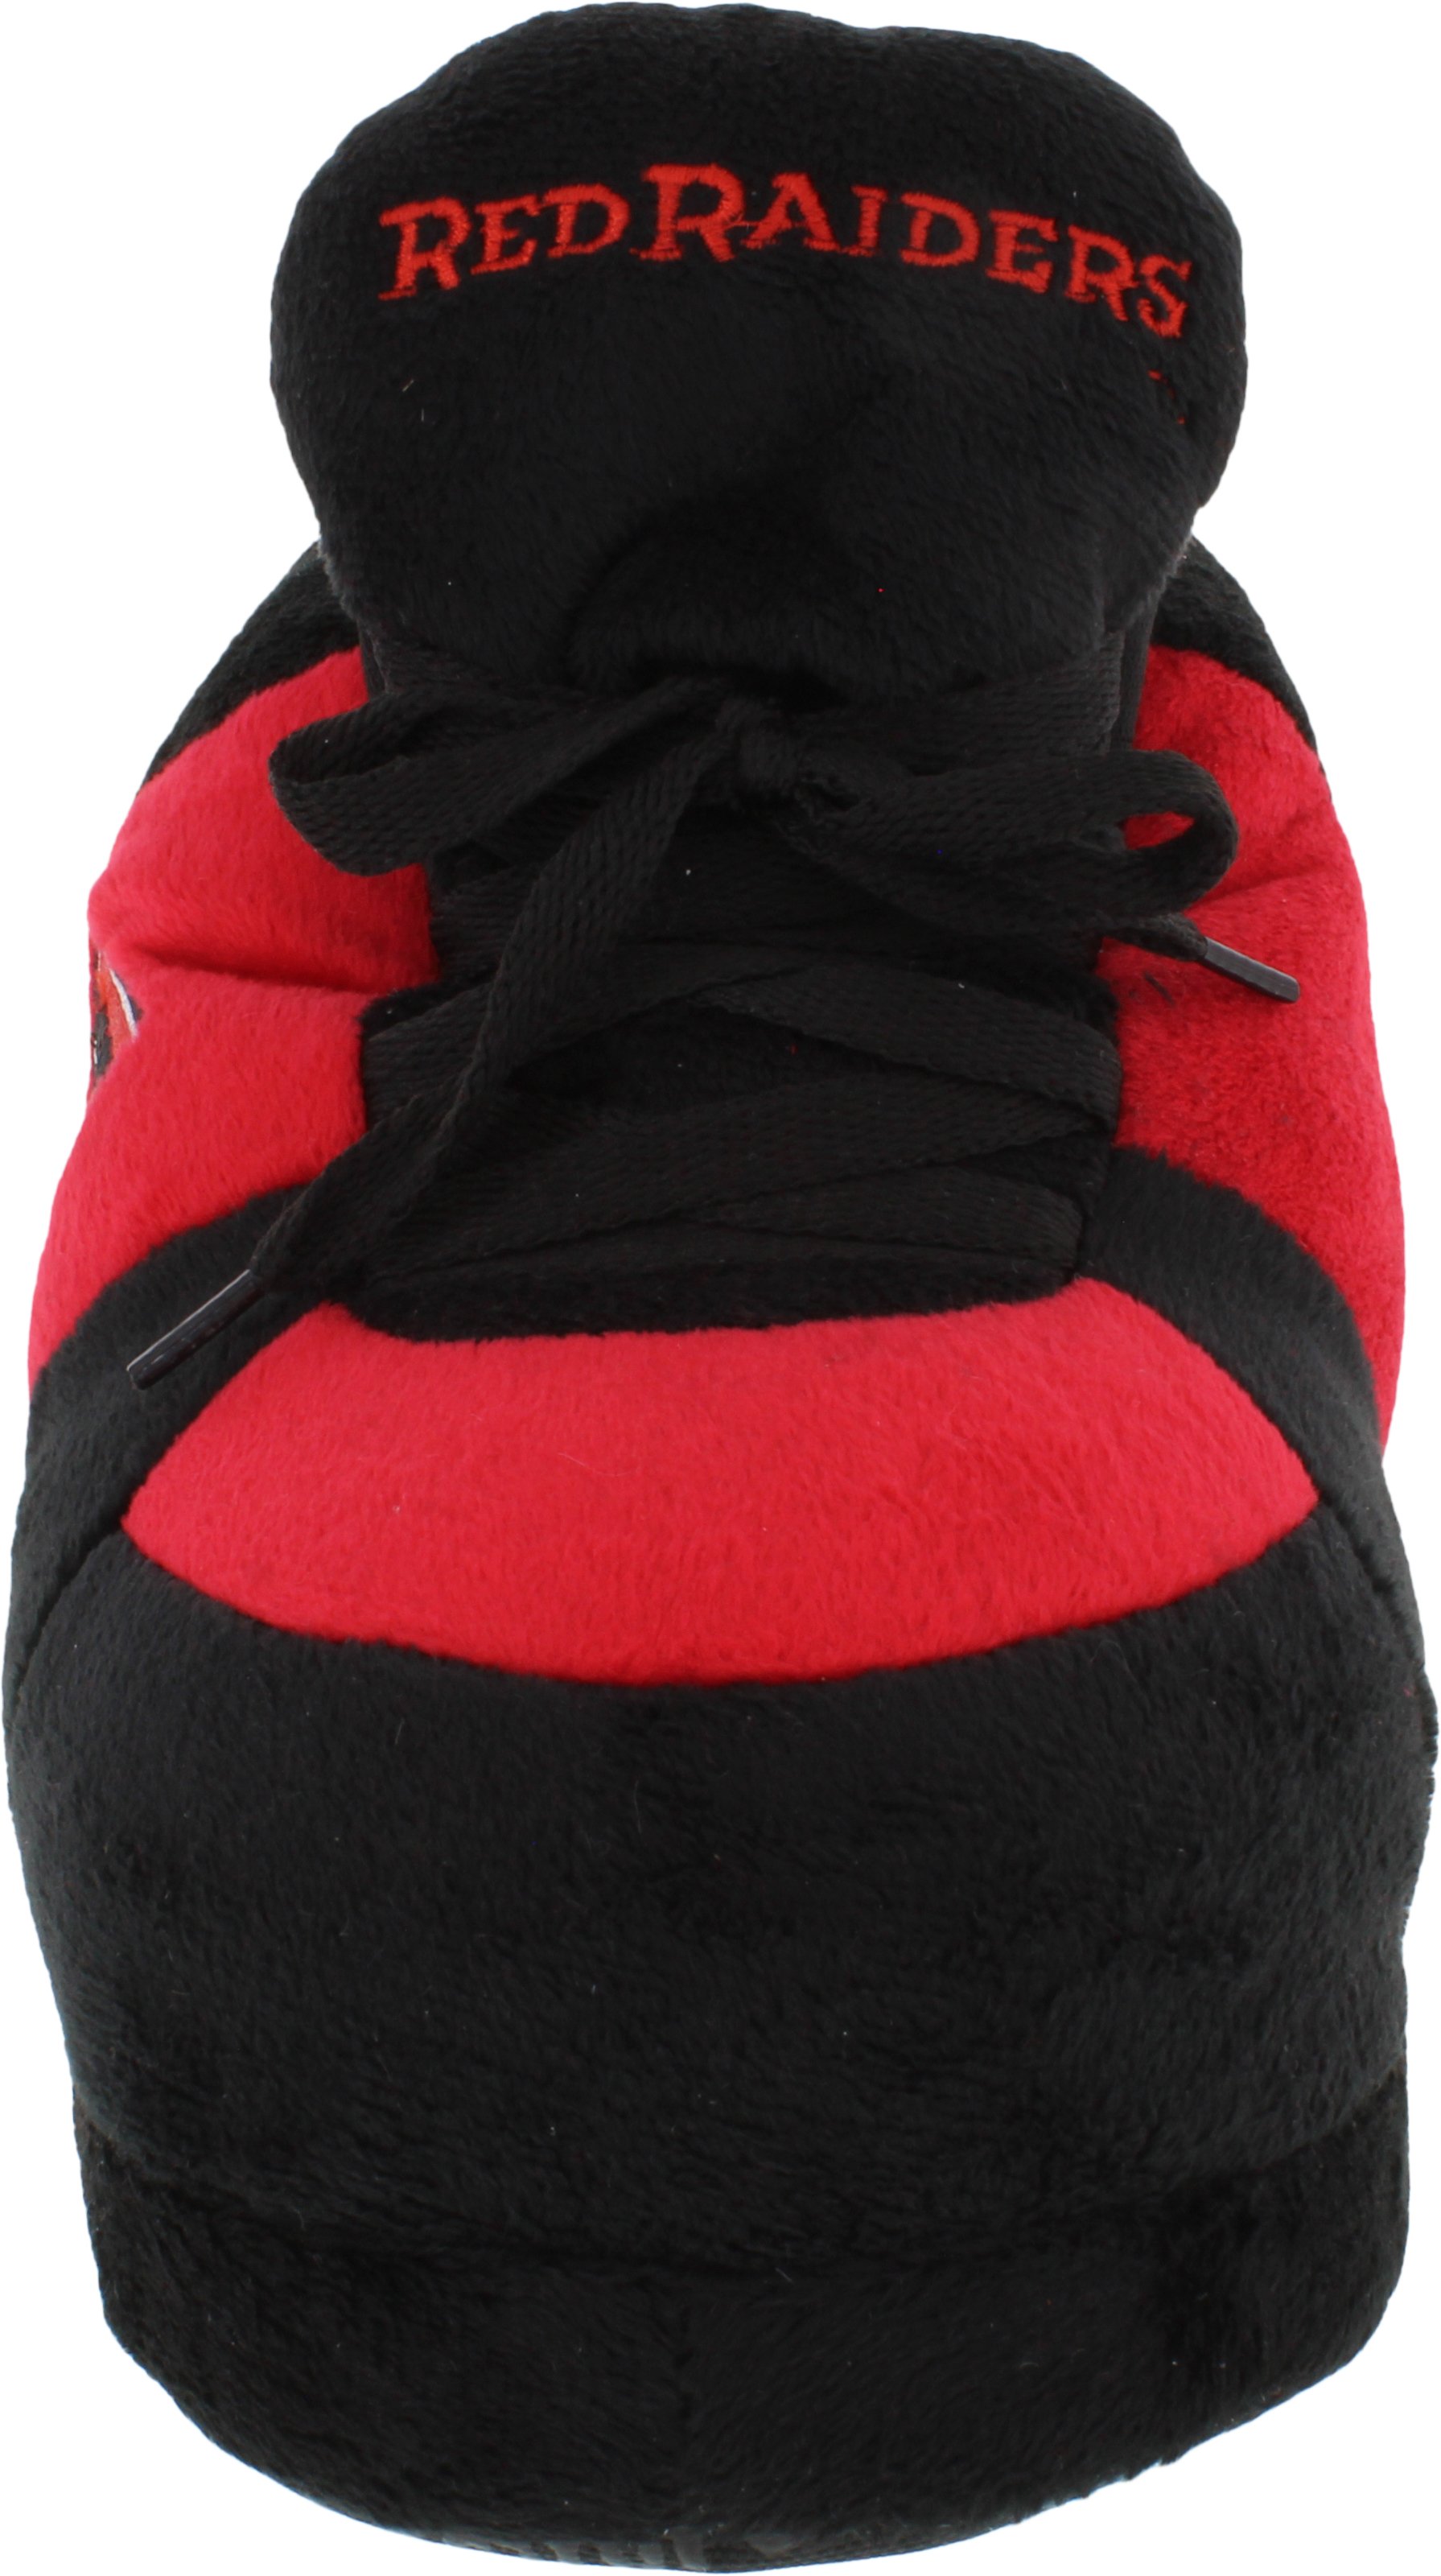 Texas Tech Red Raiders Original Comfy Feet Sneaker Slipper, X-Large - image 4 of 5